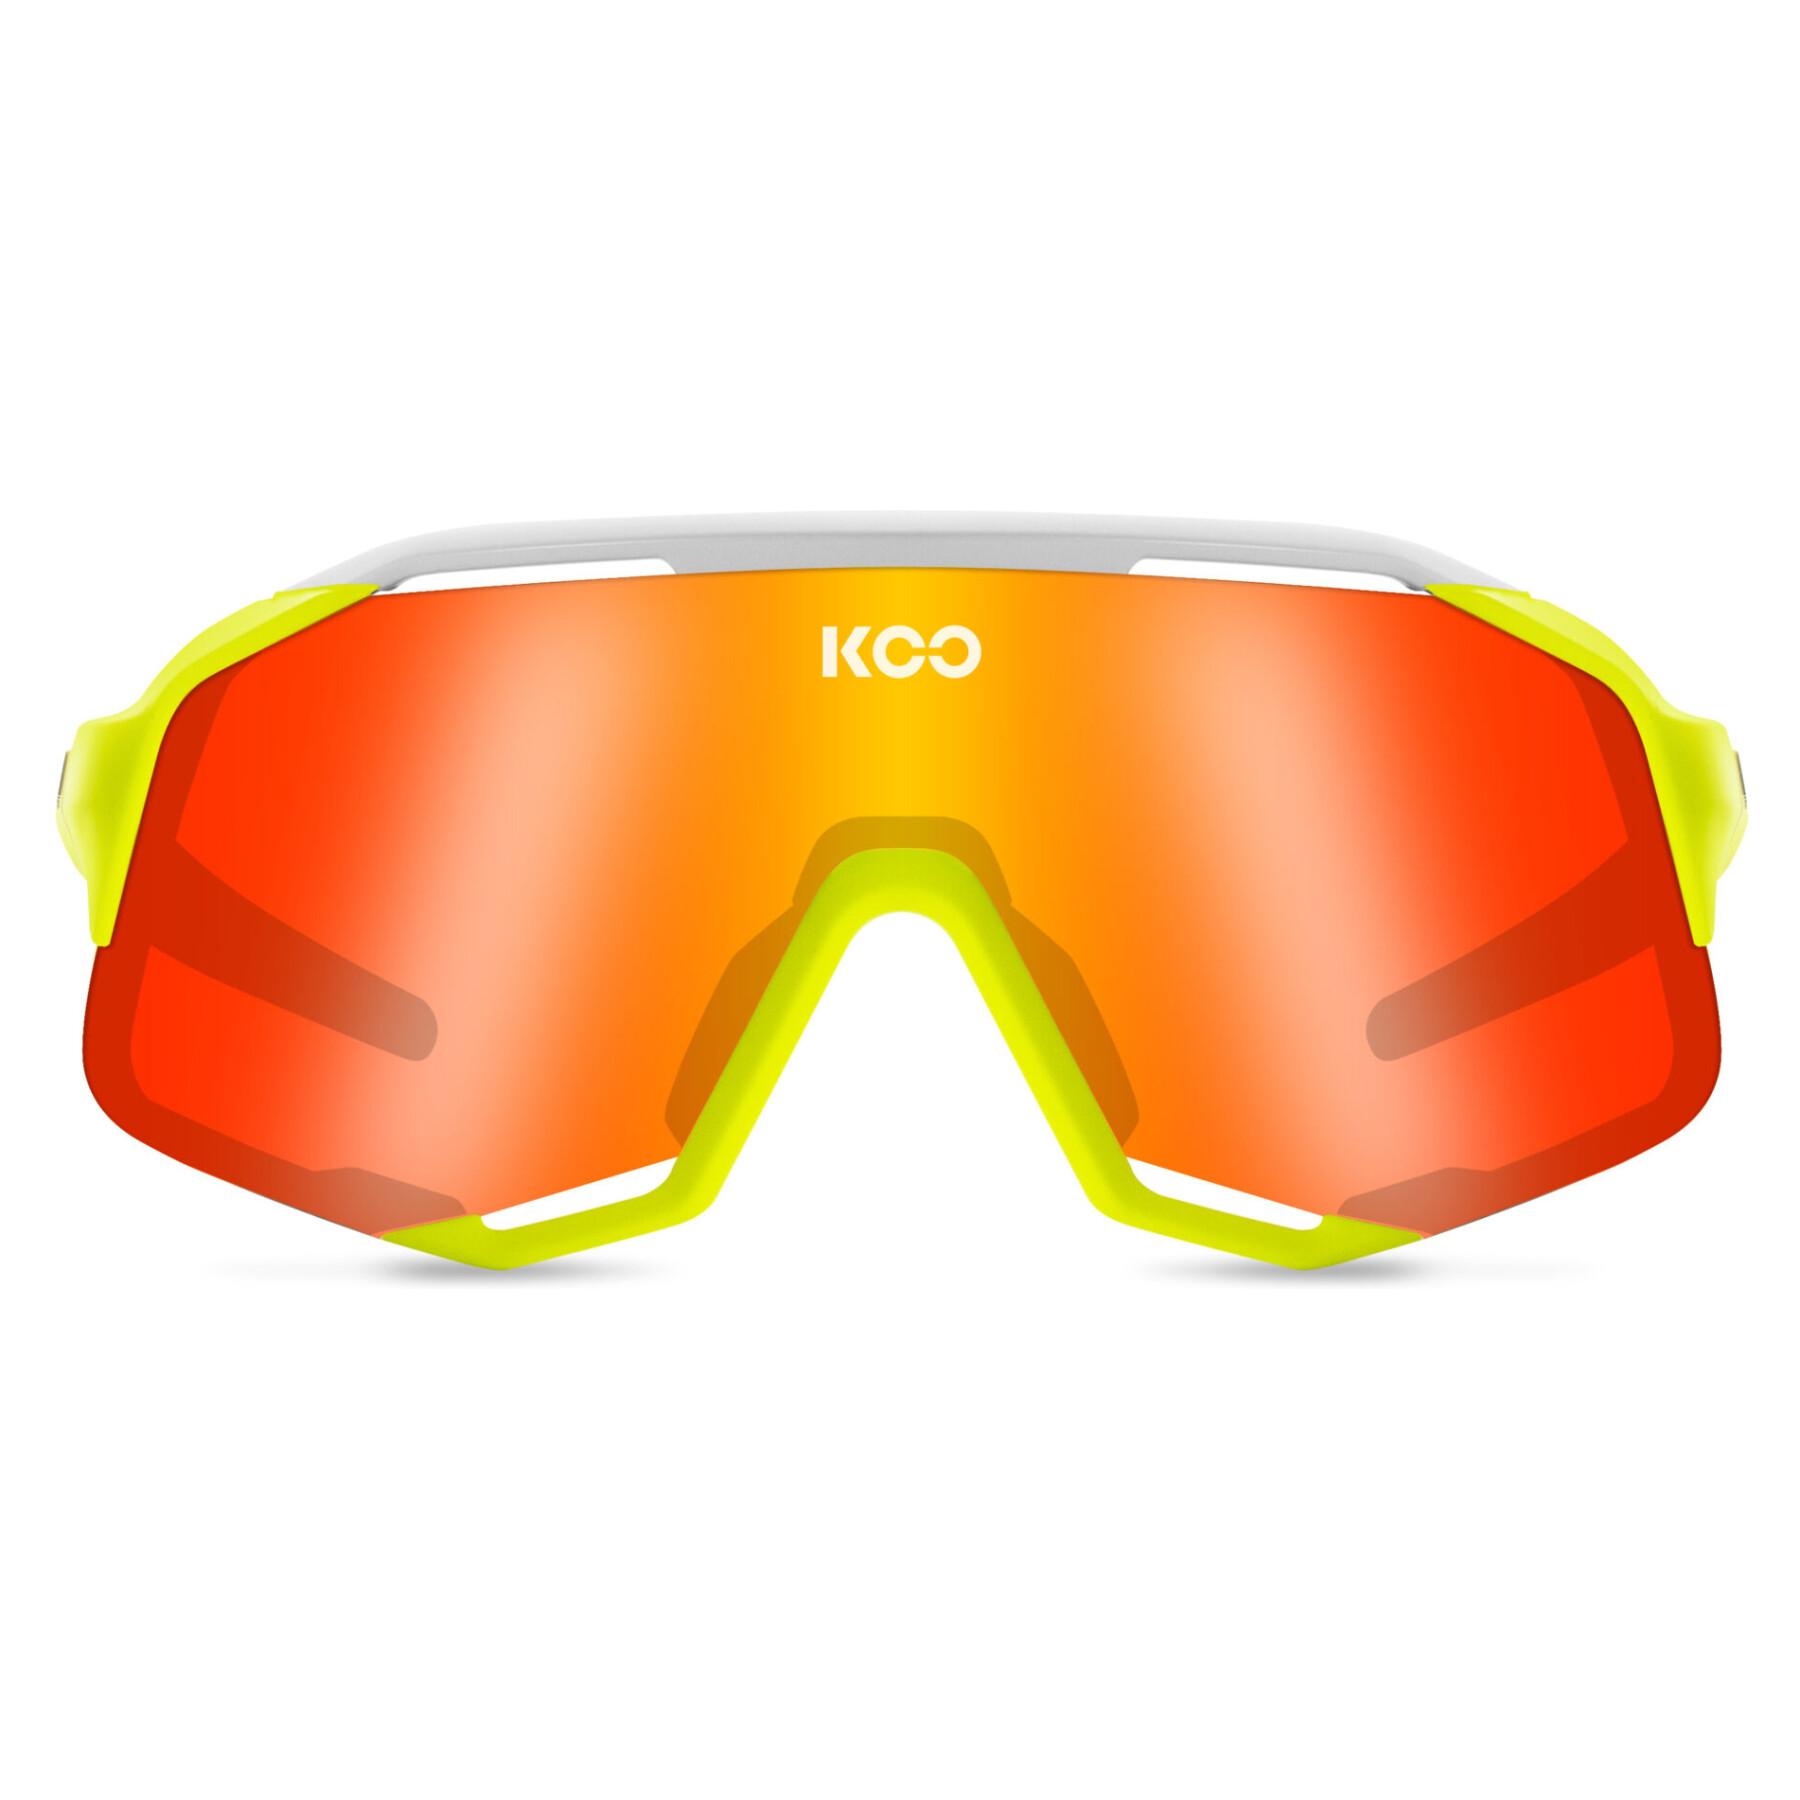 Sunglasses Koo demos energy capsule collection